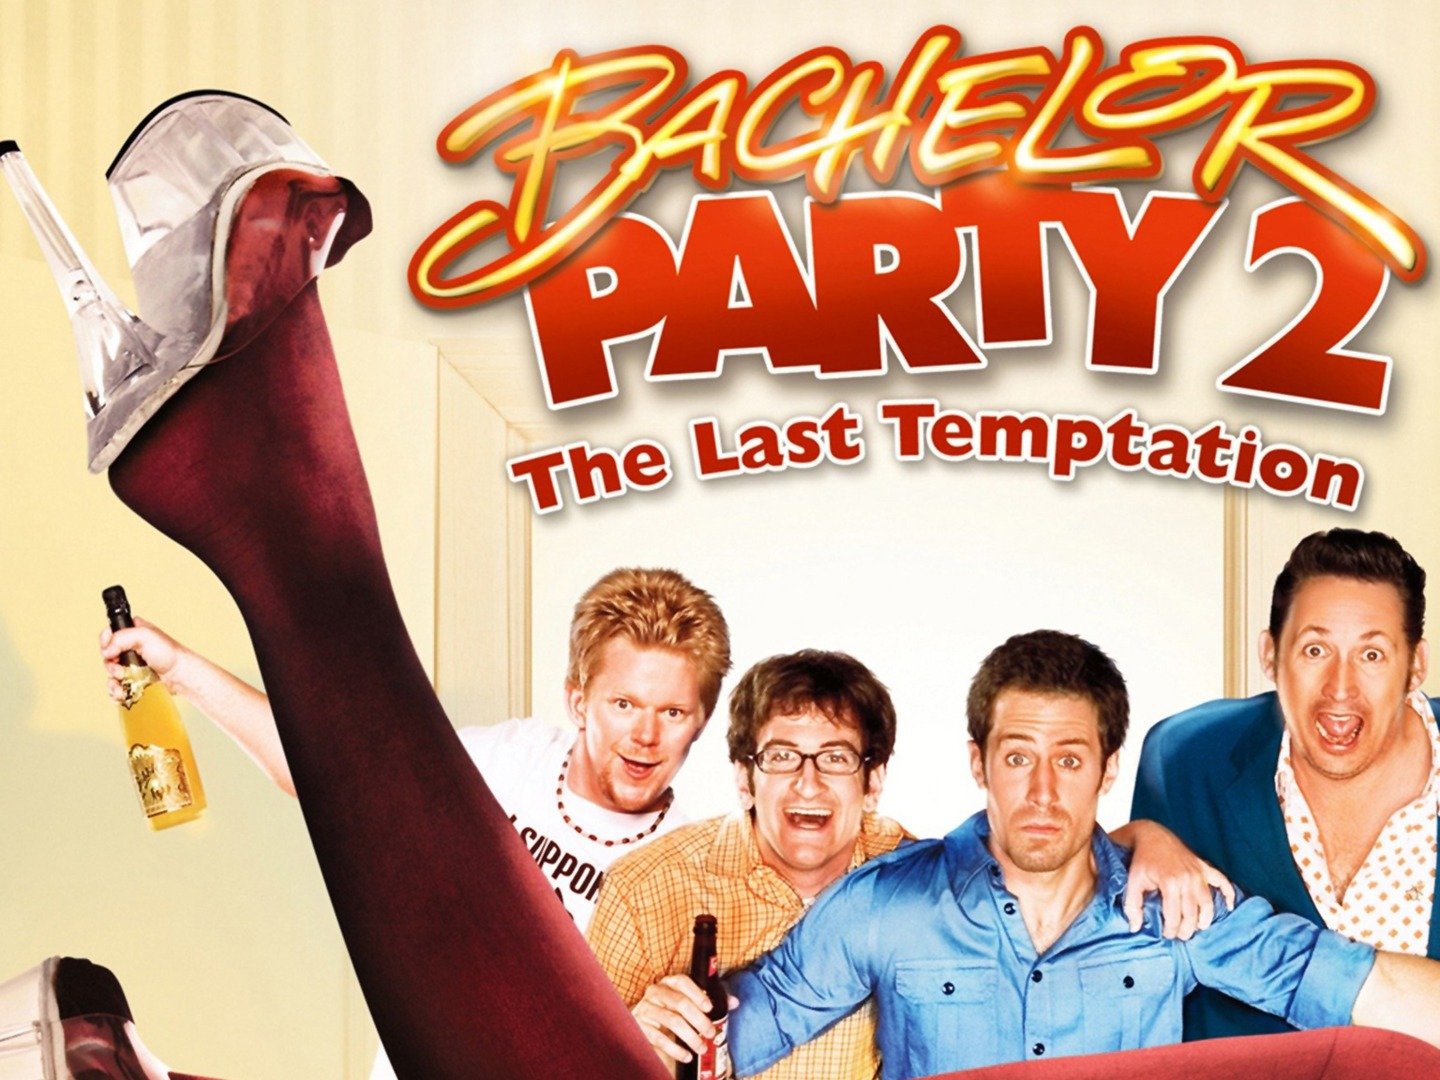 Bachelor Party 2 The Last Temptation Movie Reviews